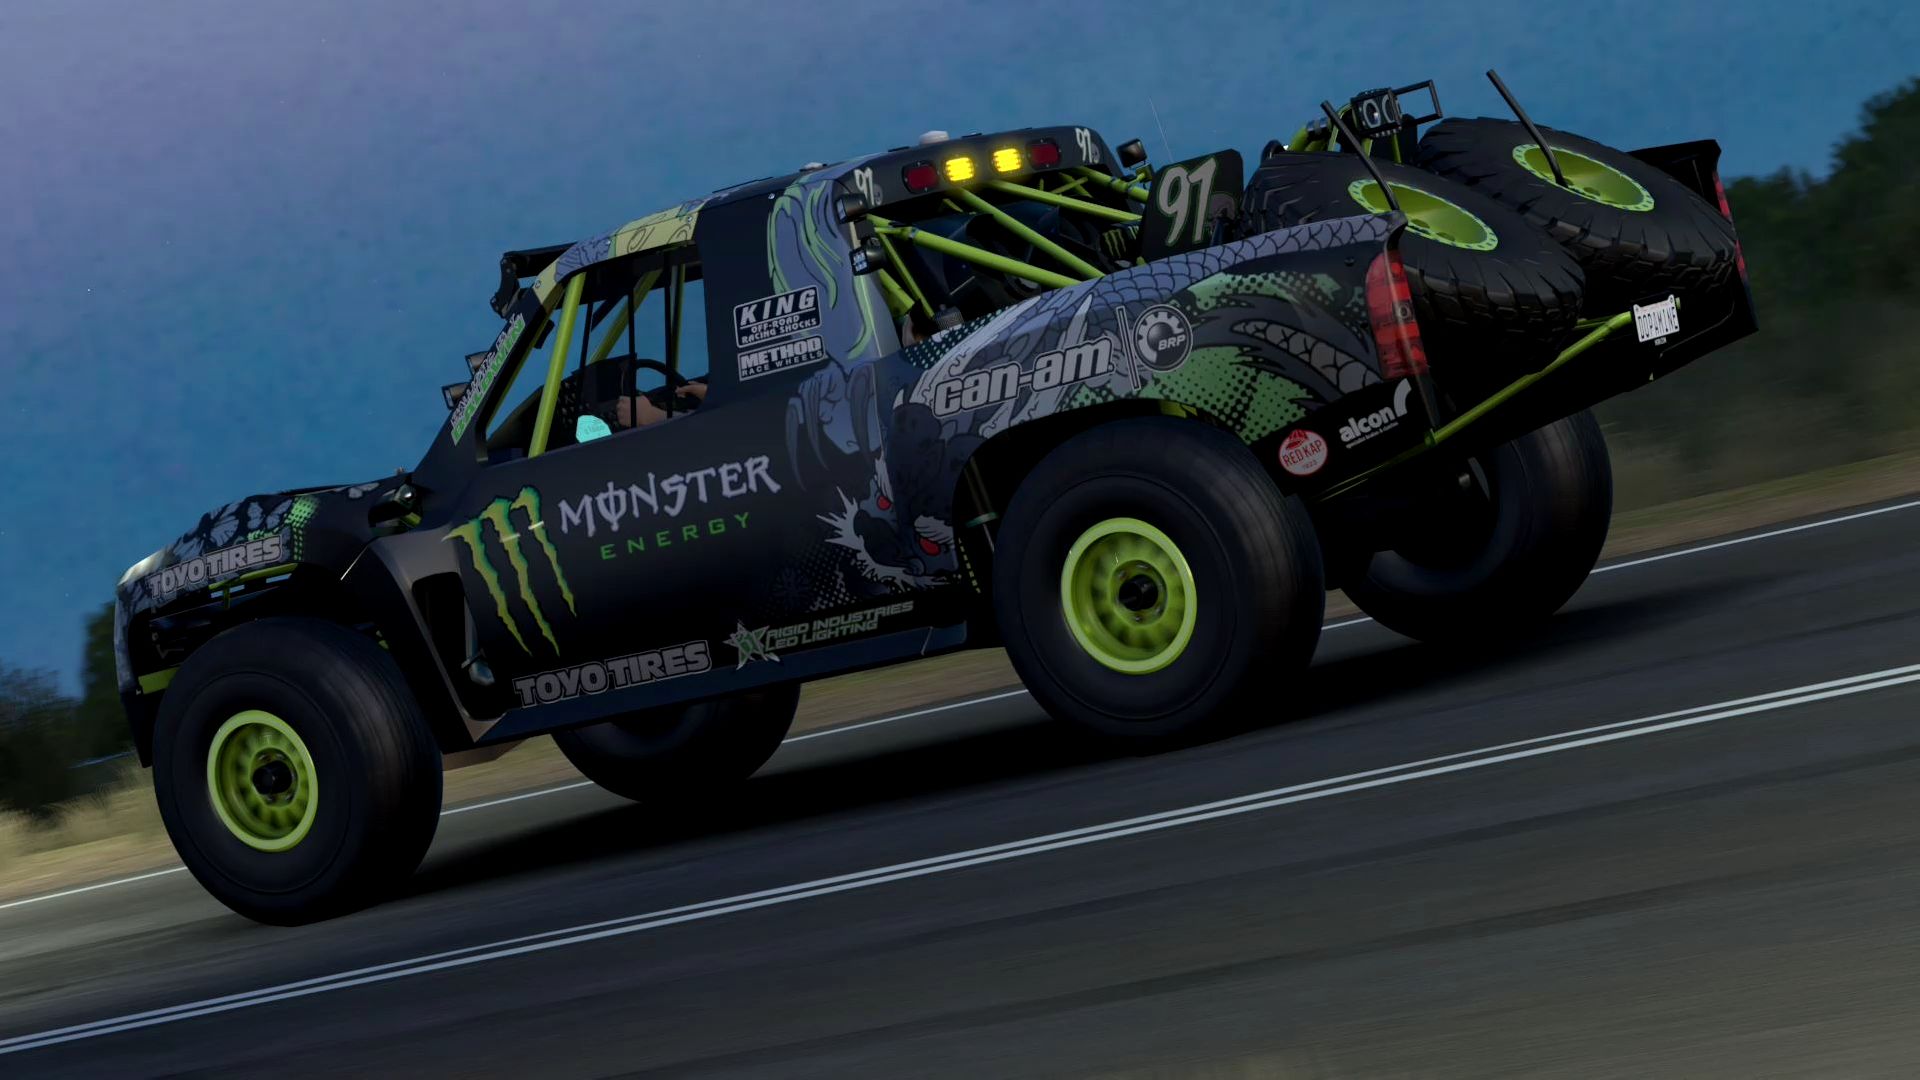 You - 2015 Baldwin Motorsports #97 Monster Energy Trophy , HD Wallpaper & Backgrounds